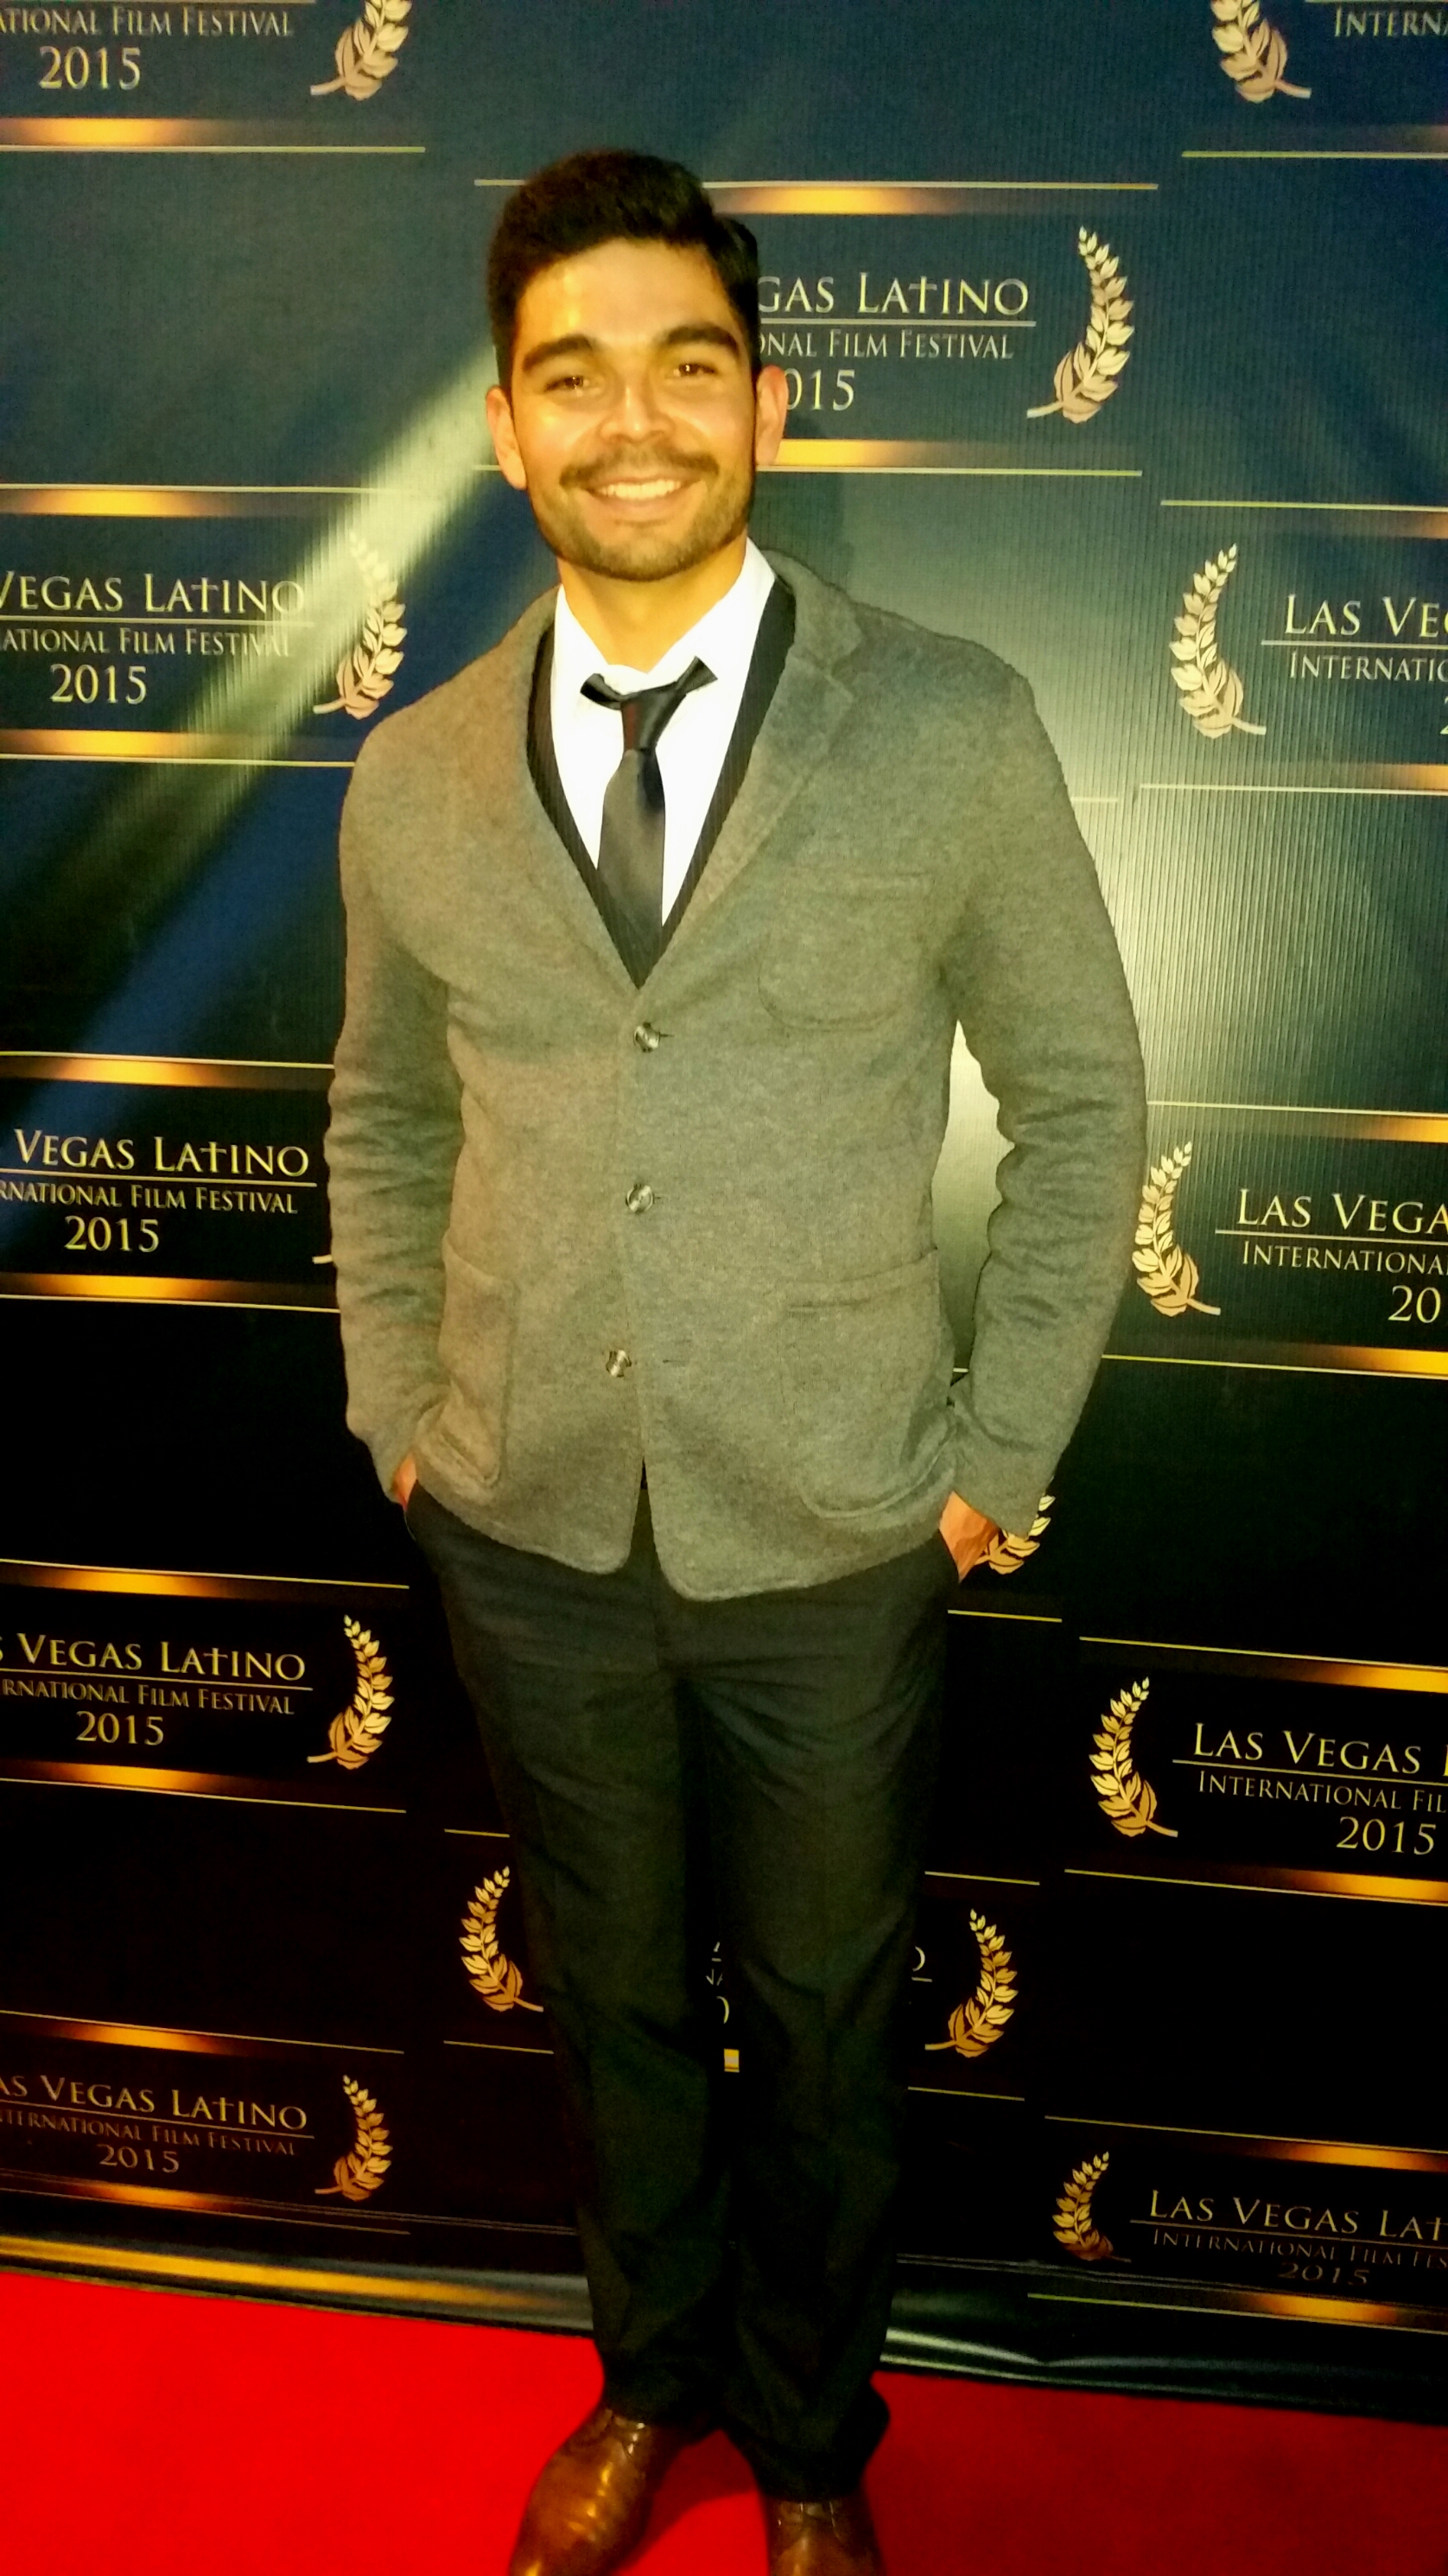 Las Vegas Latino International Film Festival 2015